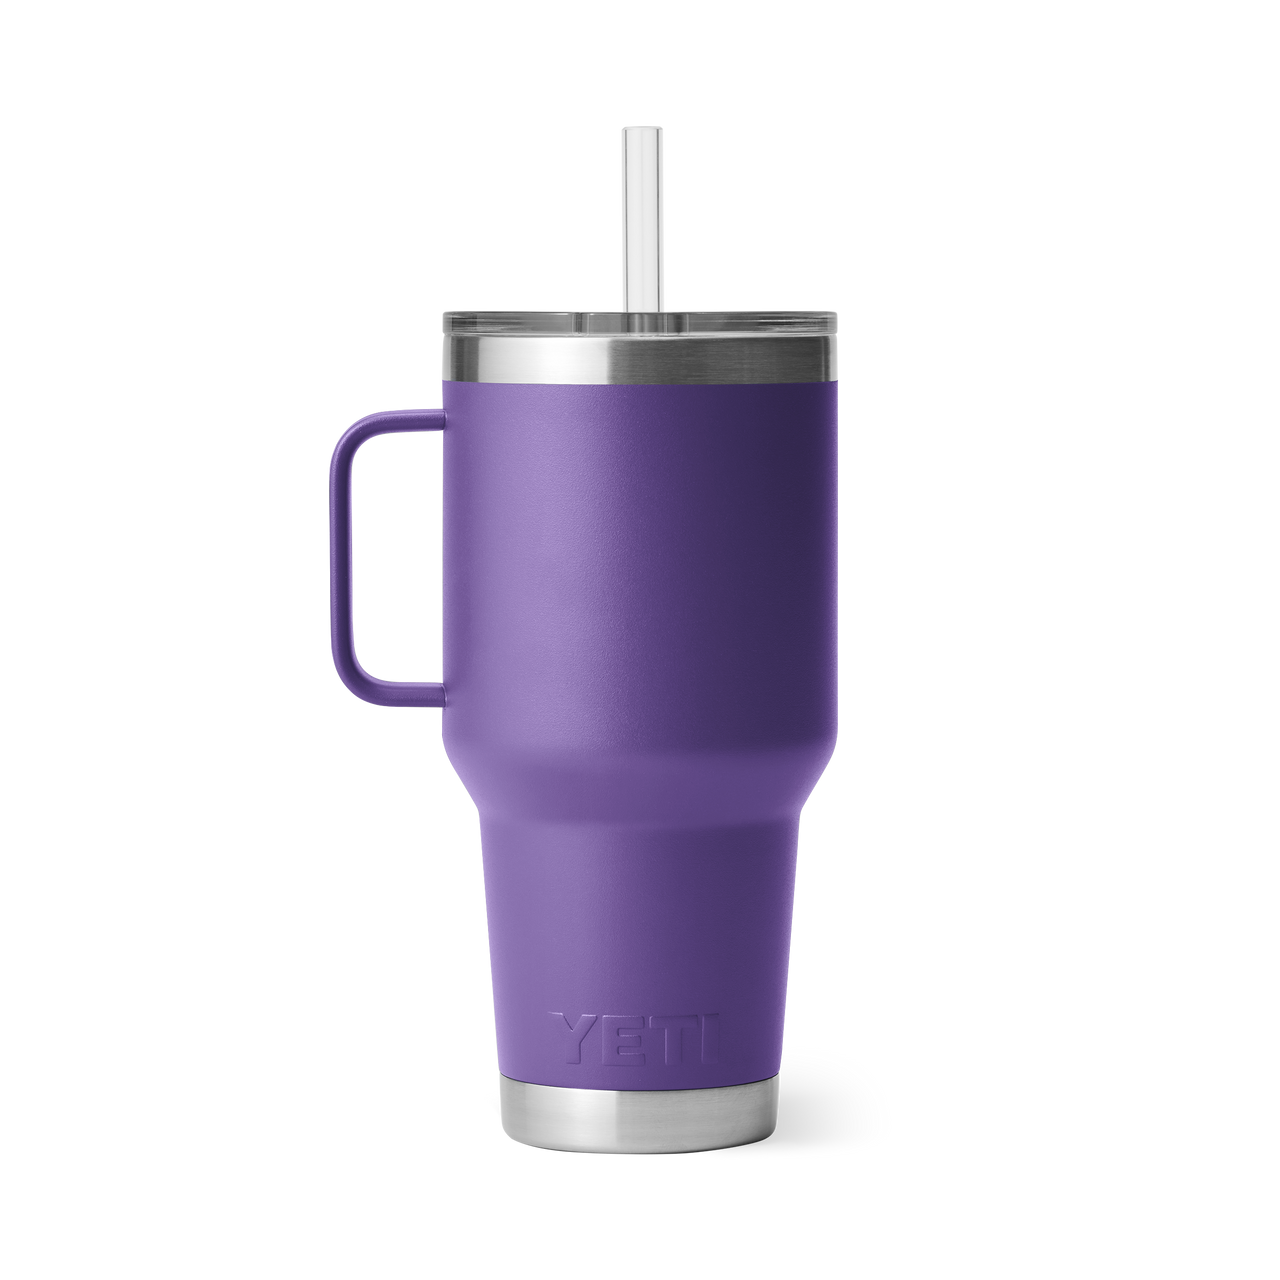  YETI Rambler 18 oz Bottle, Vacuum Insulated, Stainless Steel  with Straw Cap, Peak Purple: Home & Kitchen